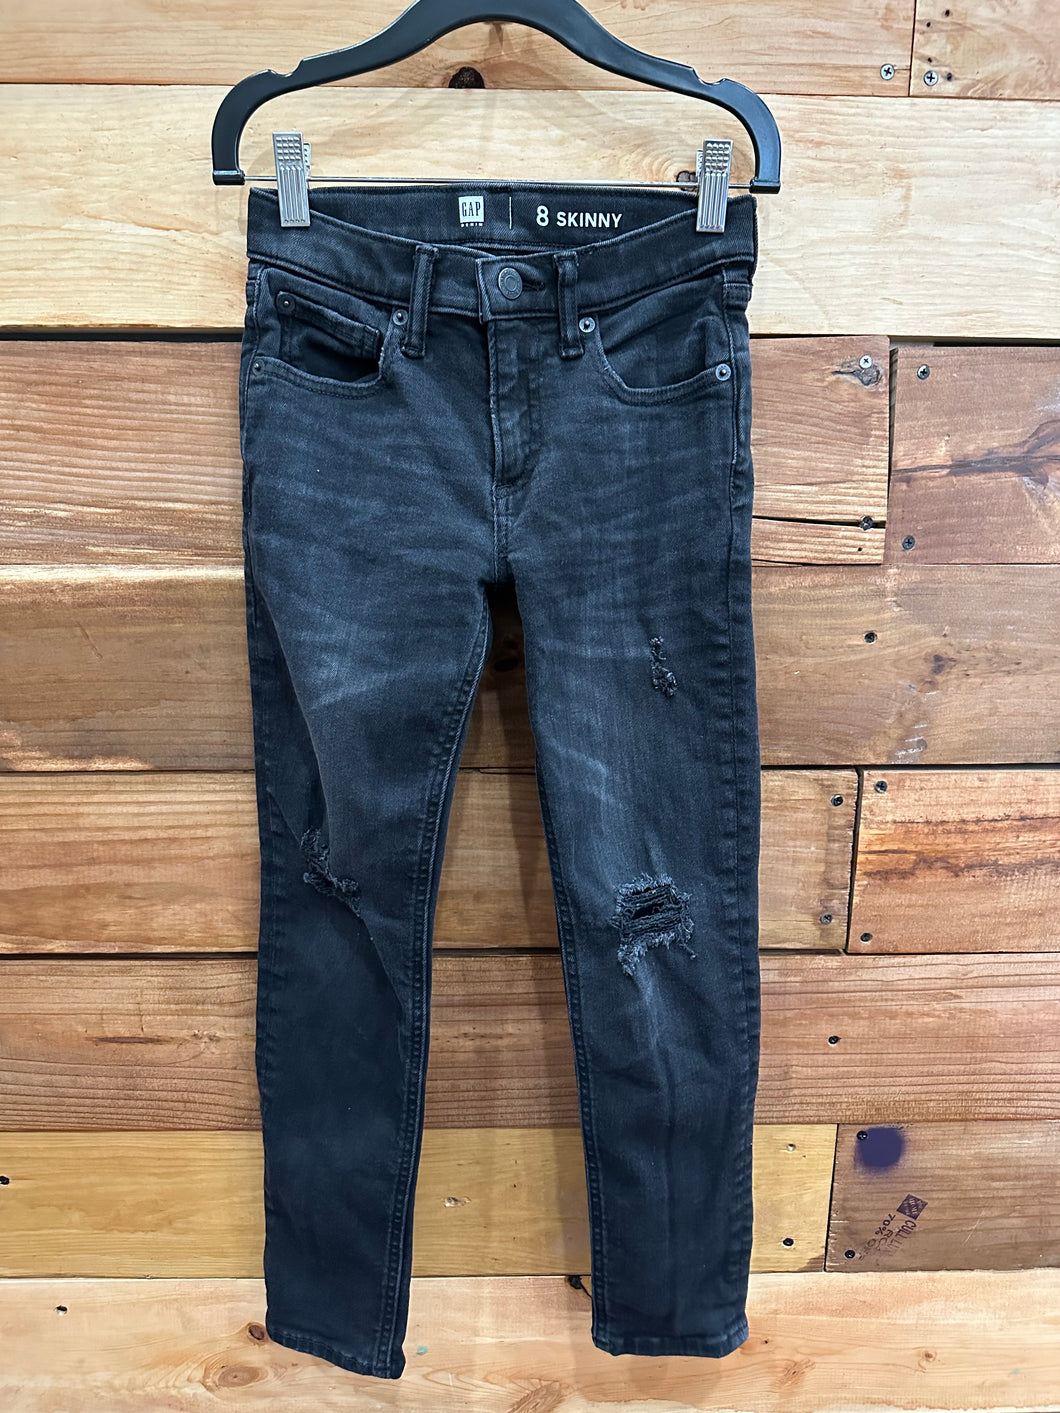 Gap Black Distressed Skinny Jeans Size 8